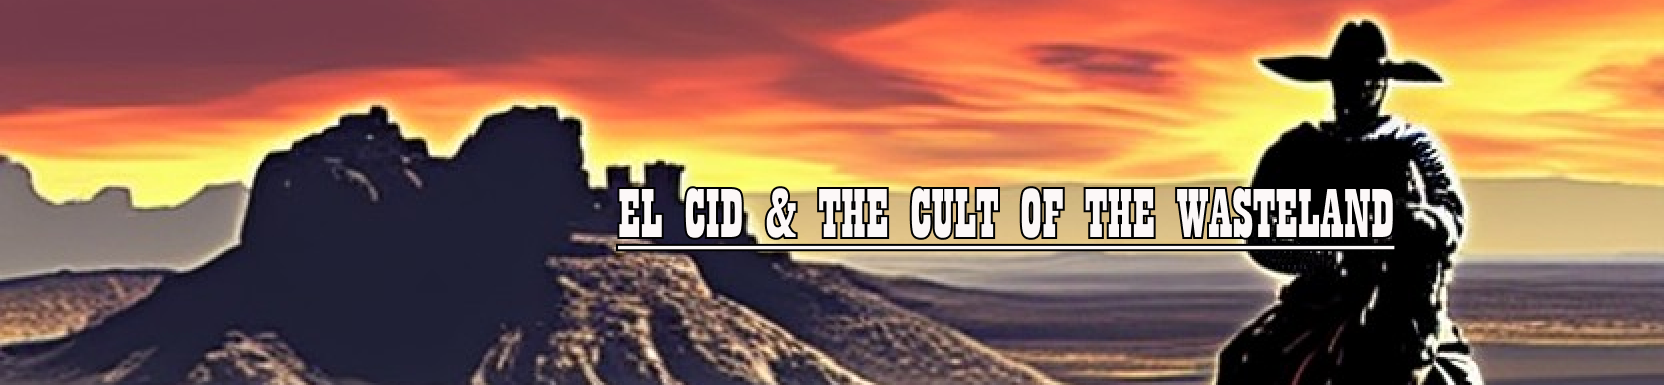 El Cid & the Cult of the Wasteland